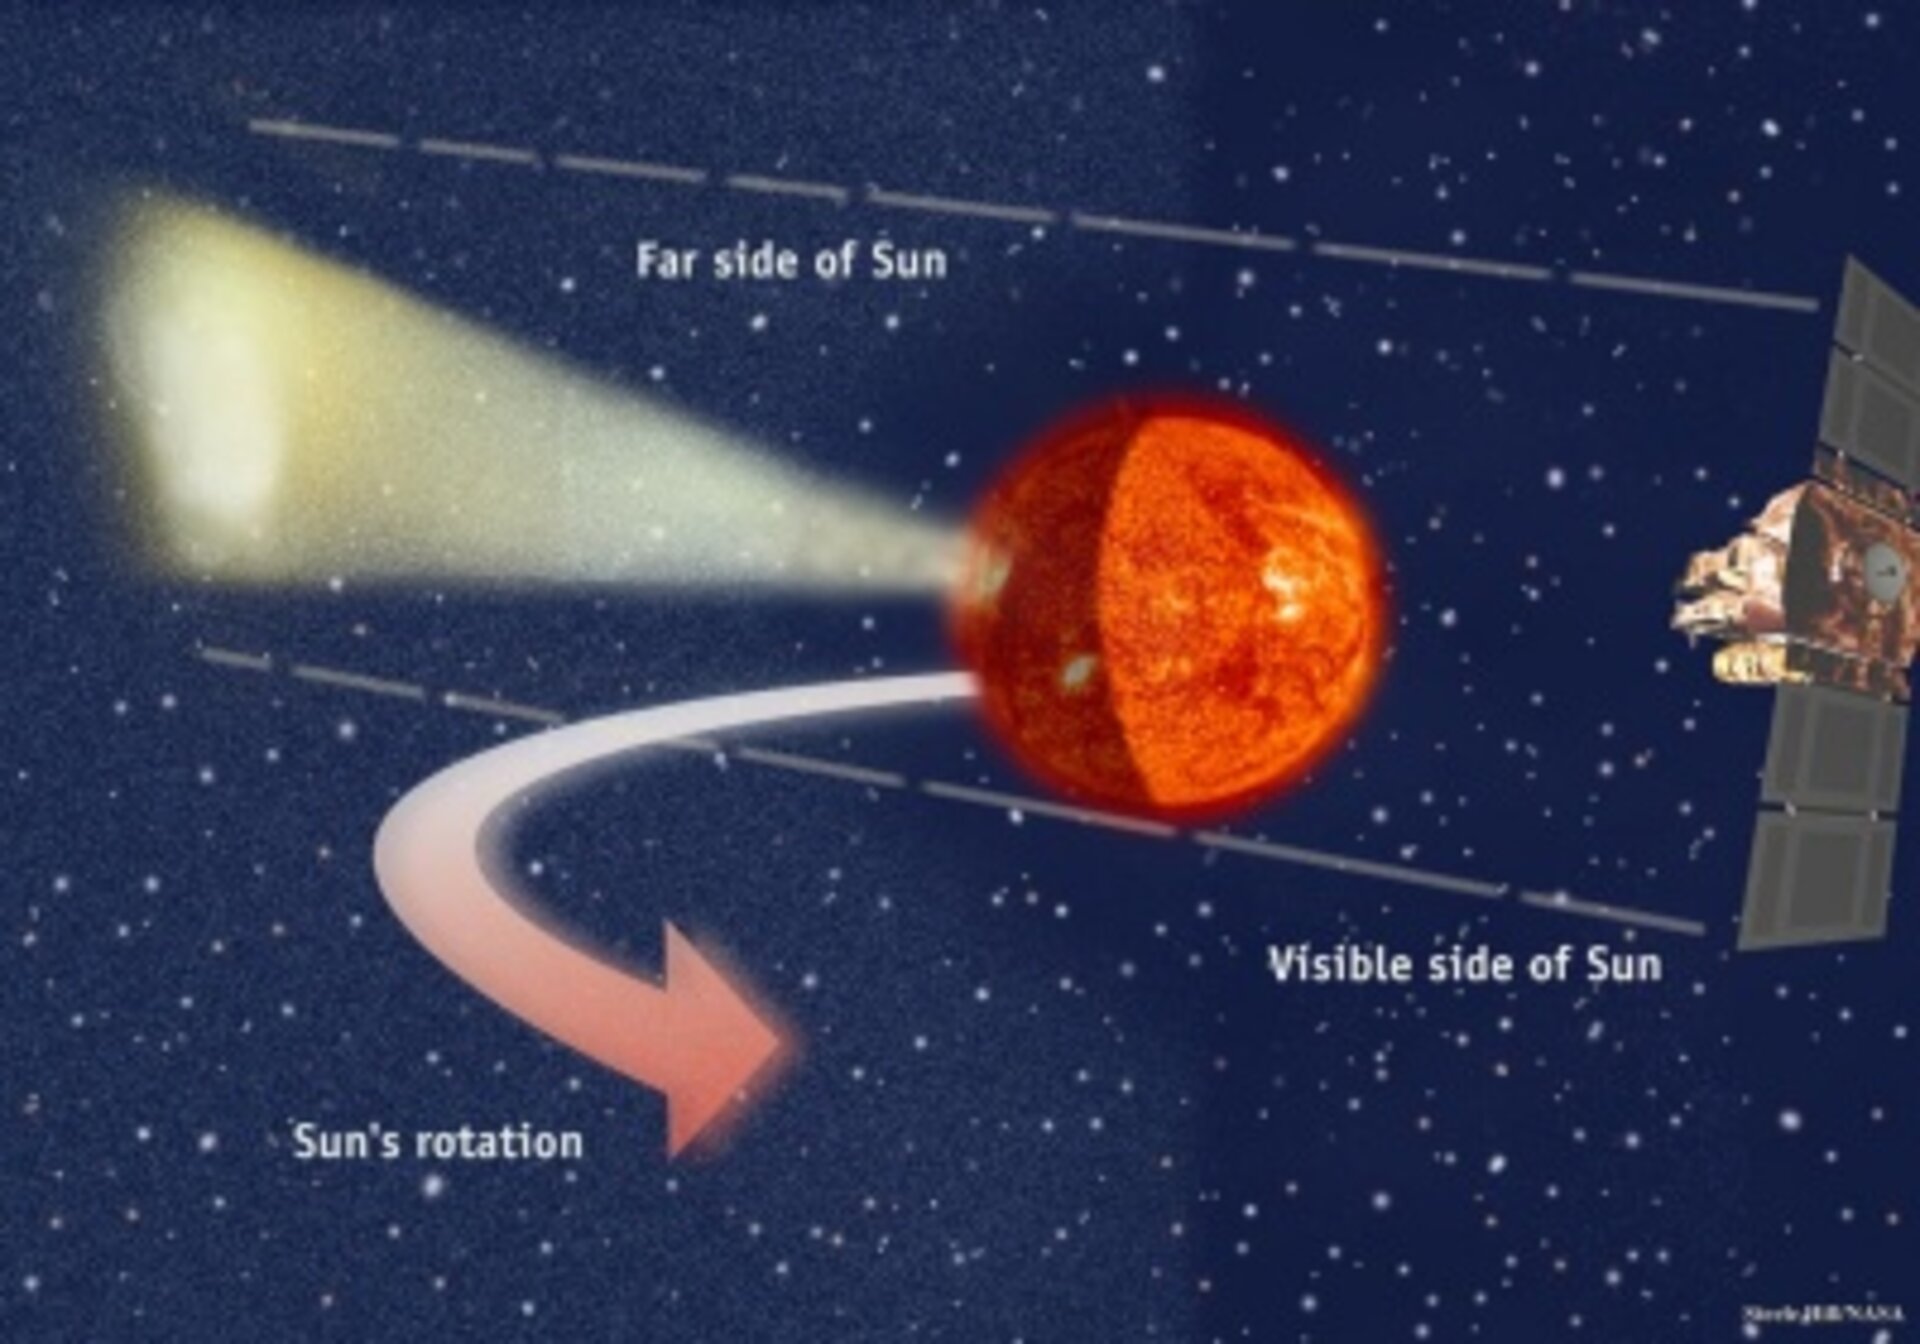 SOHO's SWAN instrument sees Lyman-alpha emission